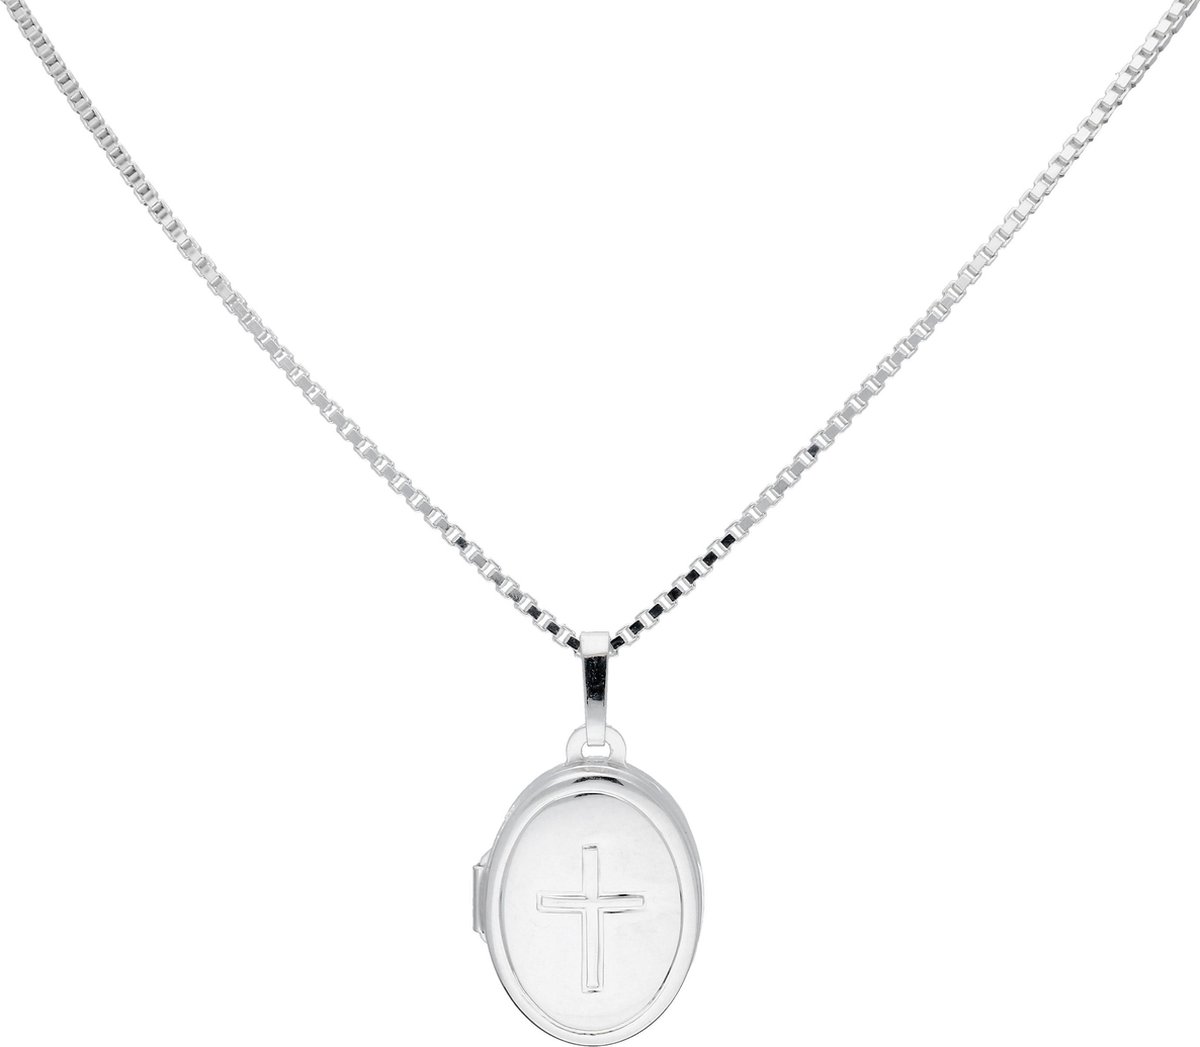 Lilly Ketting ovale medaillon met kruis - Zilver - 16x12mm - Venetiaans - | DGM Outlet